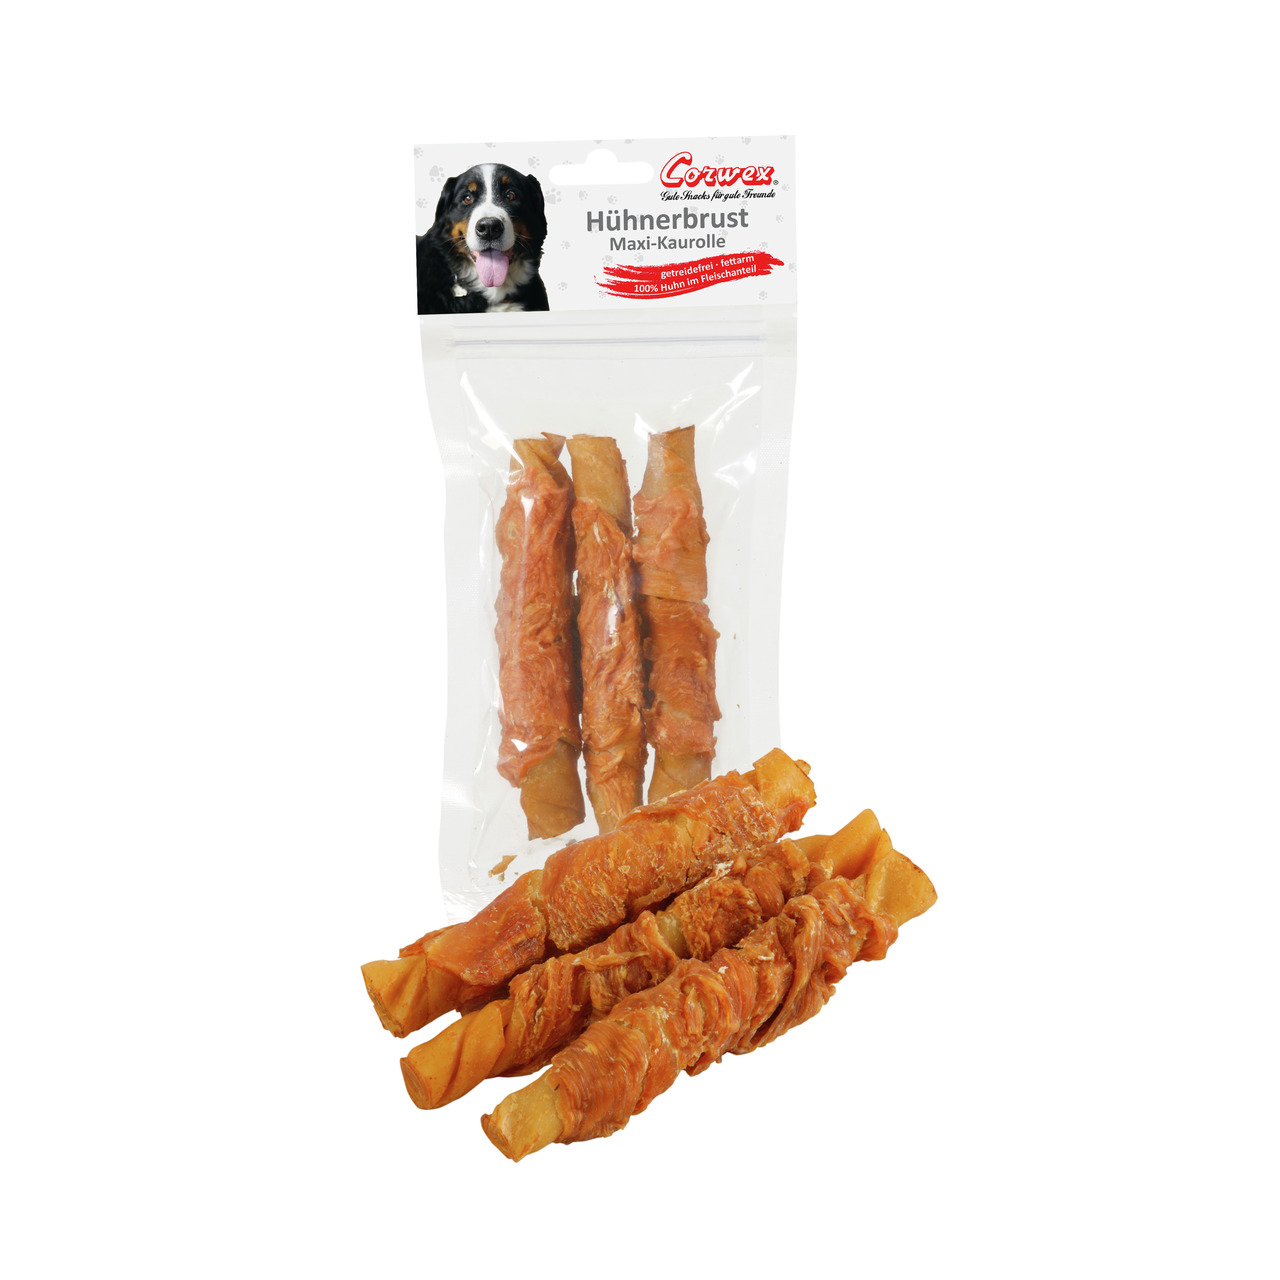 Corwex Hühnerbrust Maxi-Kaurolle Hunde Snack 3 Stück